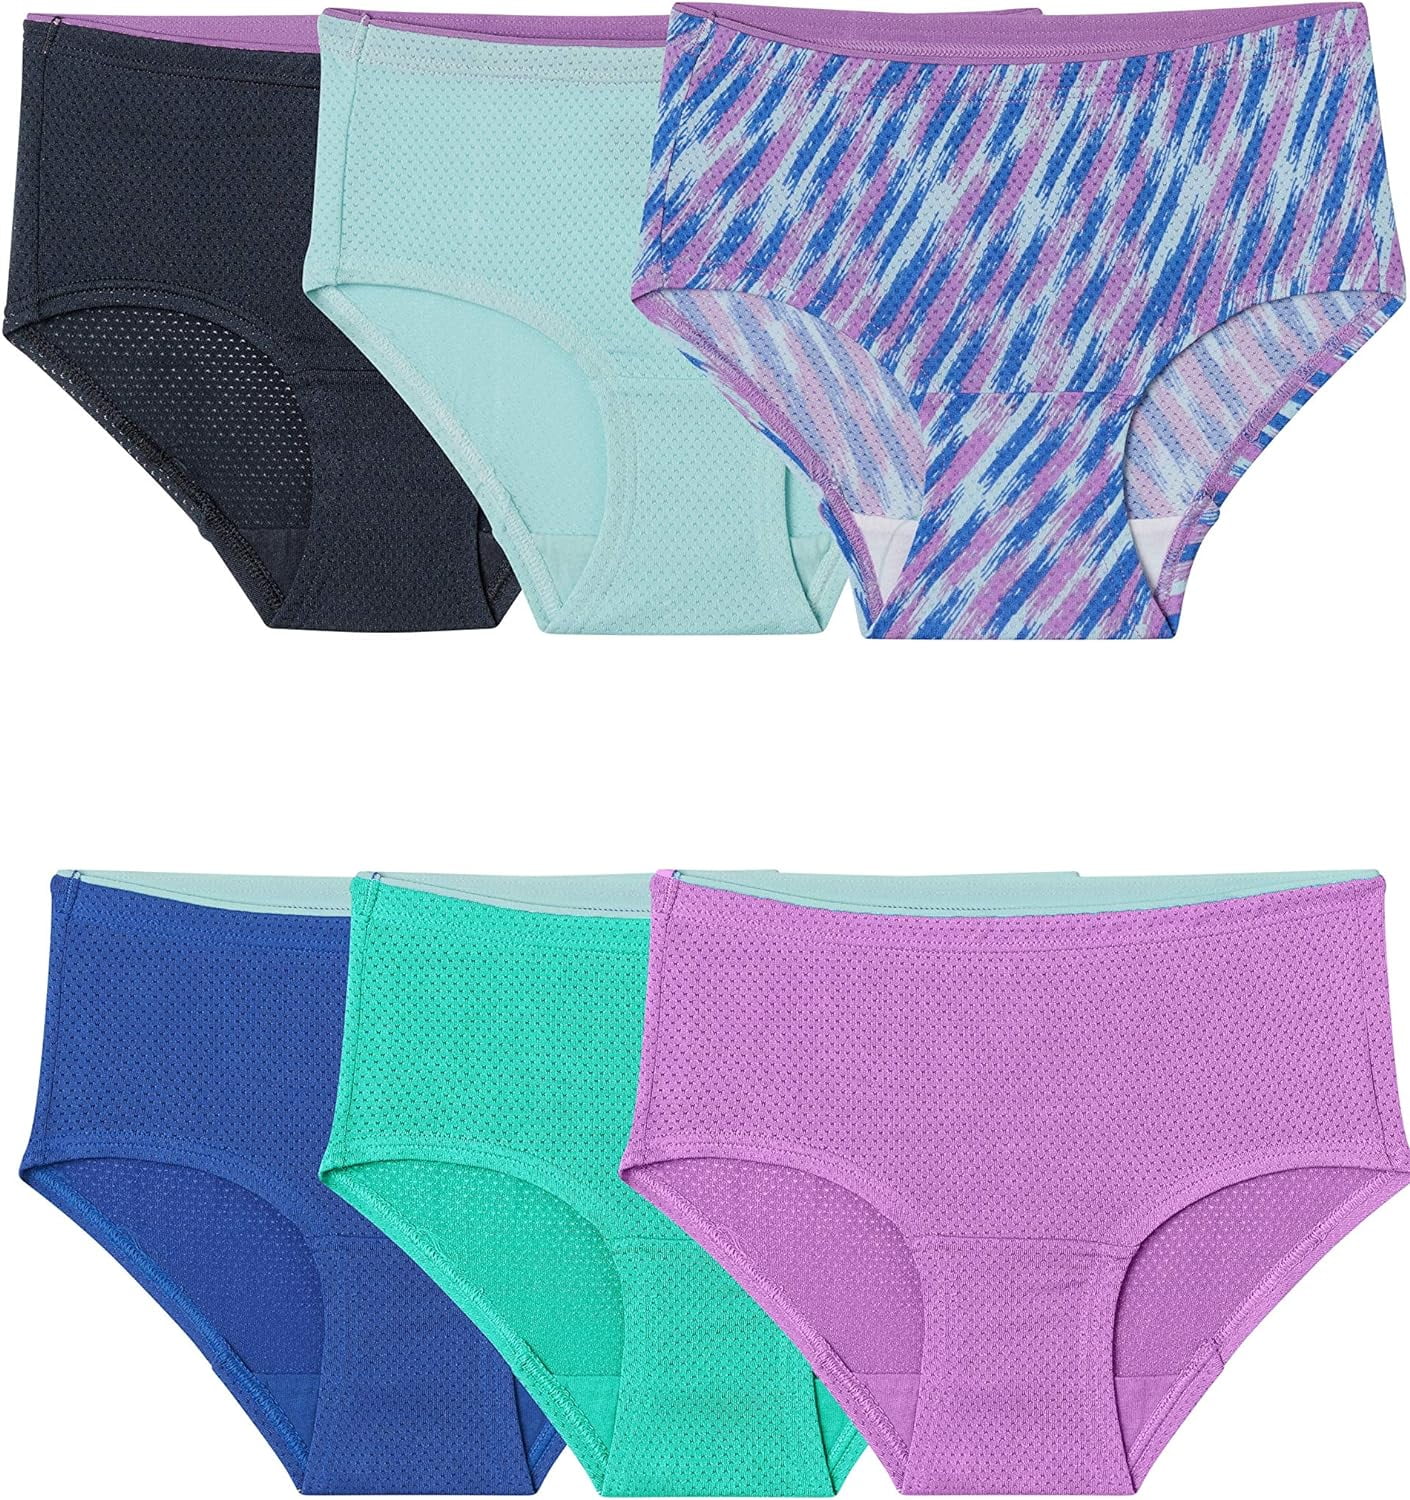 Buy Carters Girls 7-Pack Print Days Underwear at Ubuy Palestine